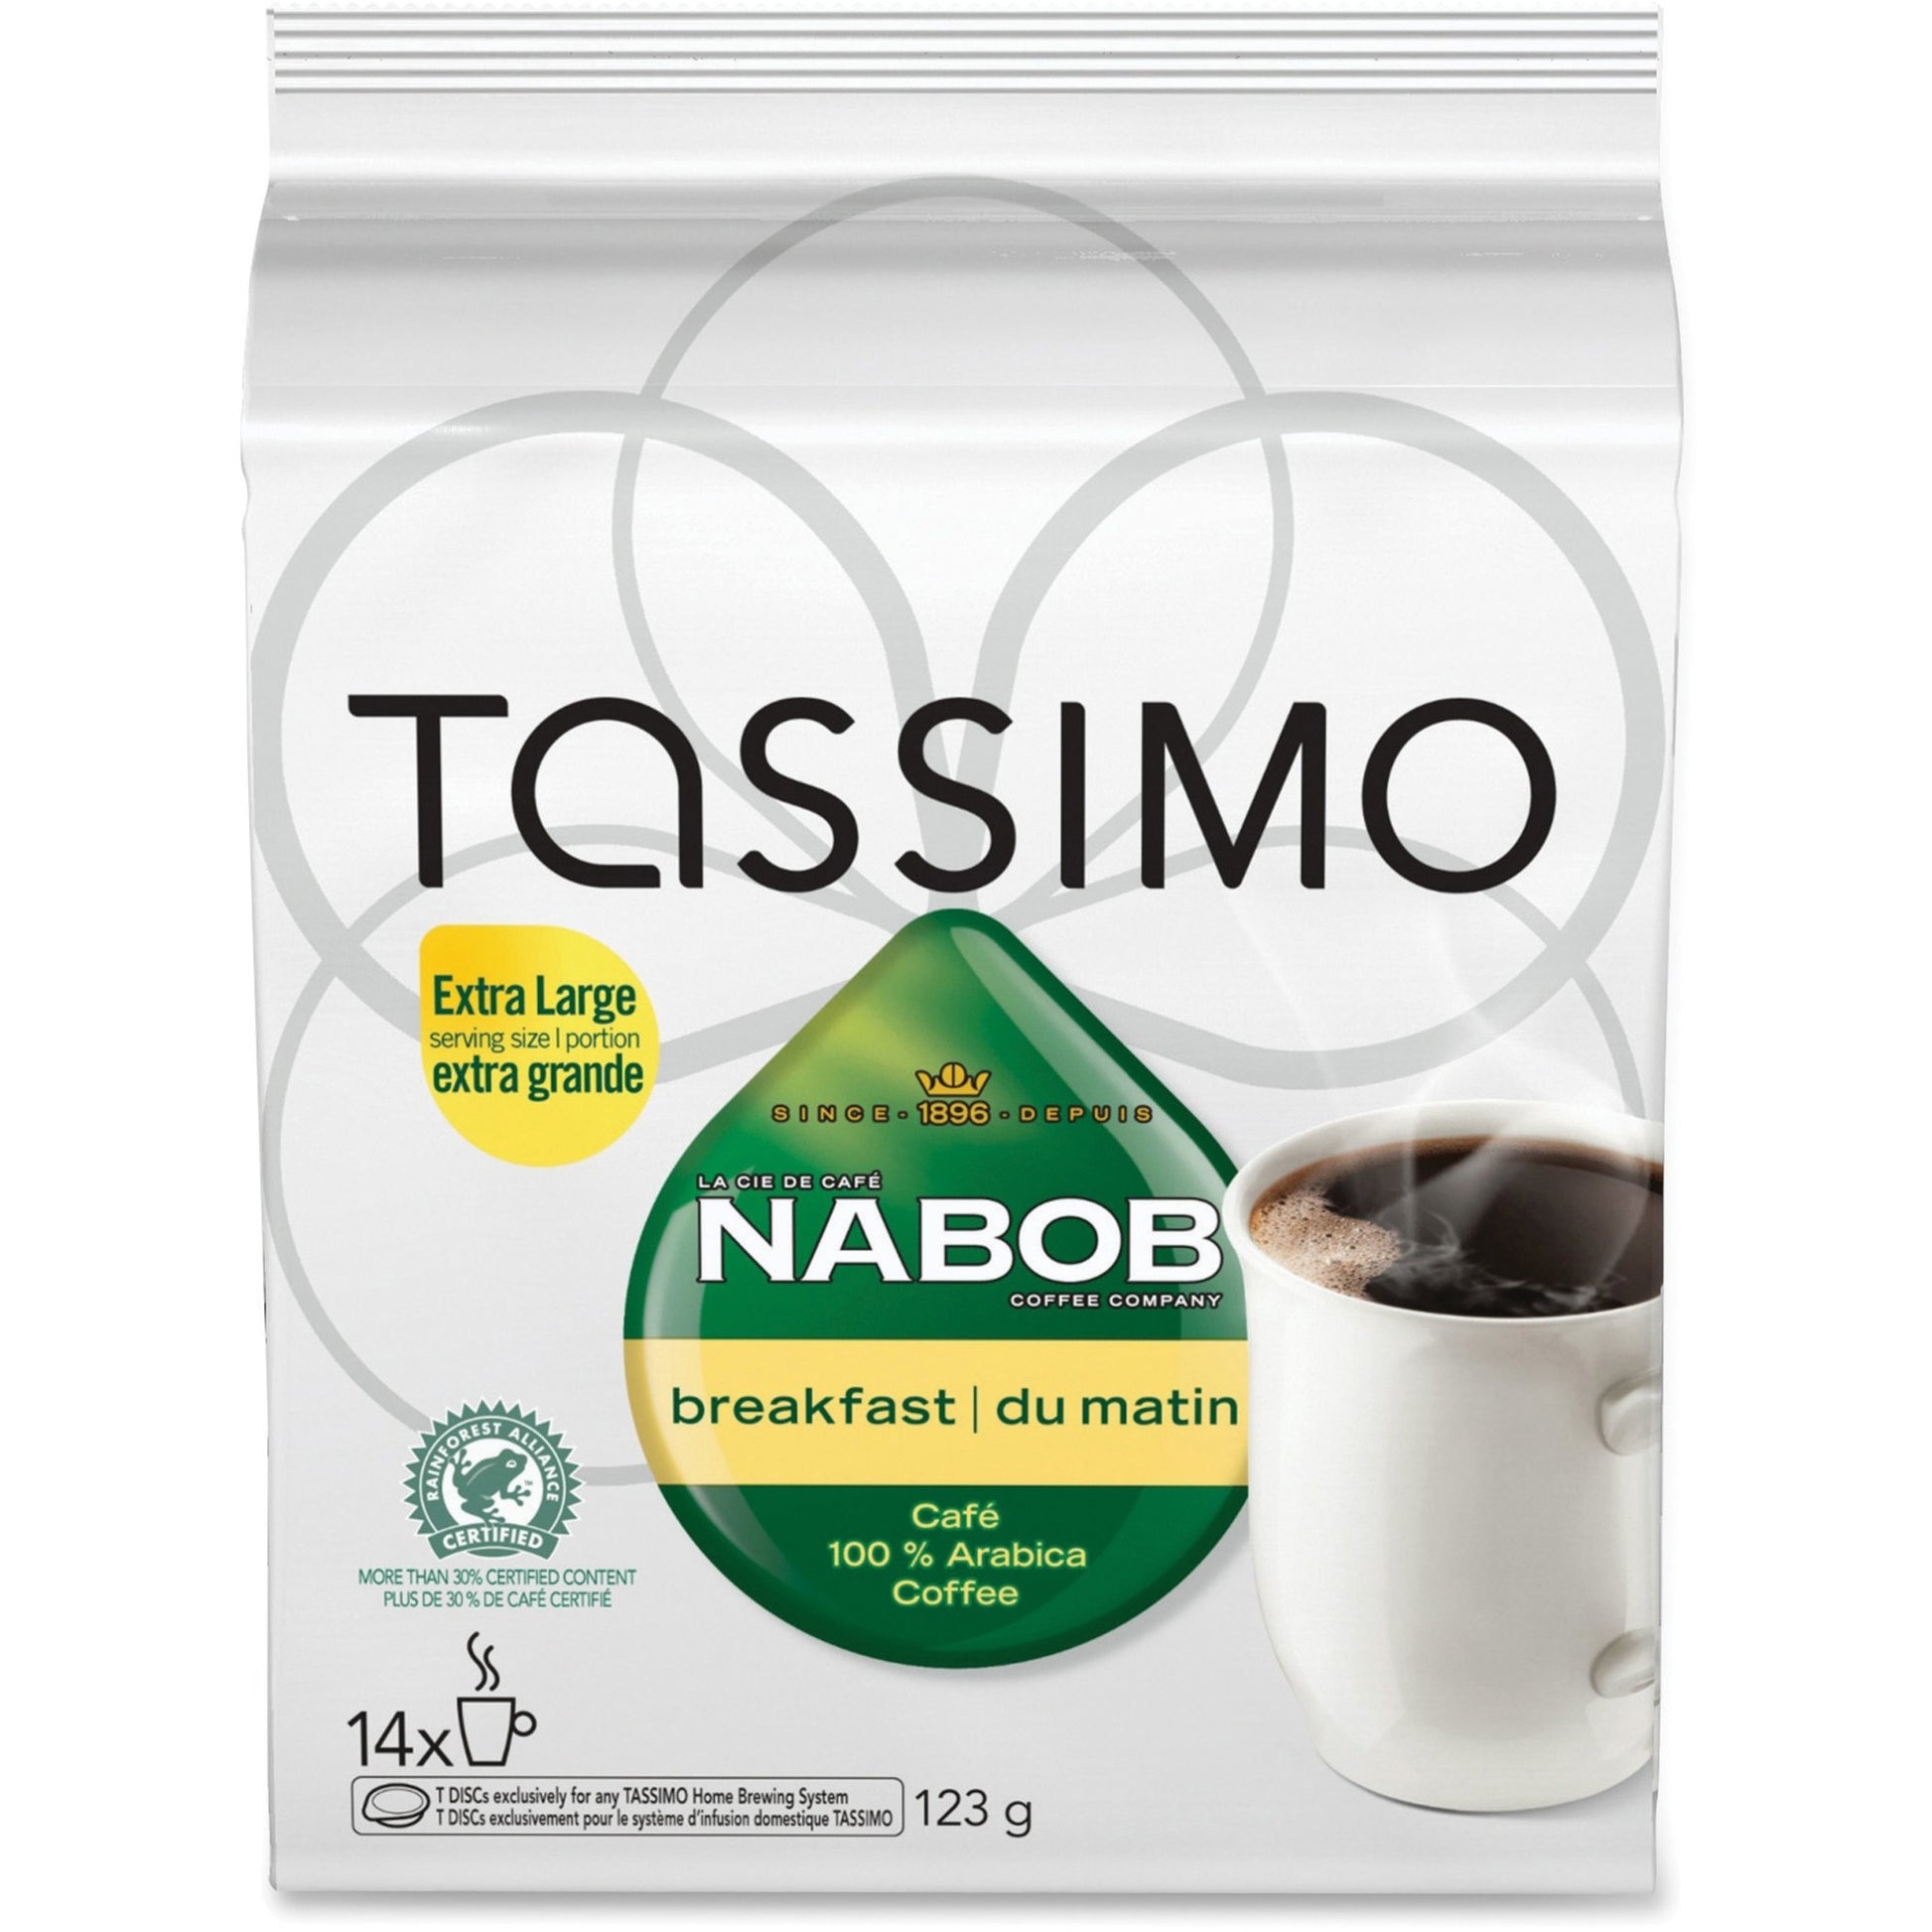 Elco Pod Tassimo Pods Nabob Breakfast Coffee Singles